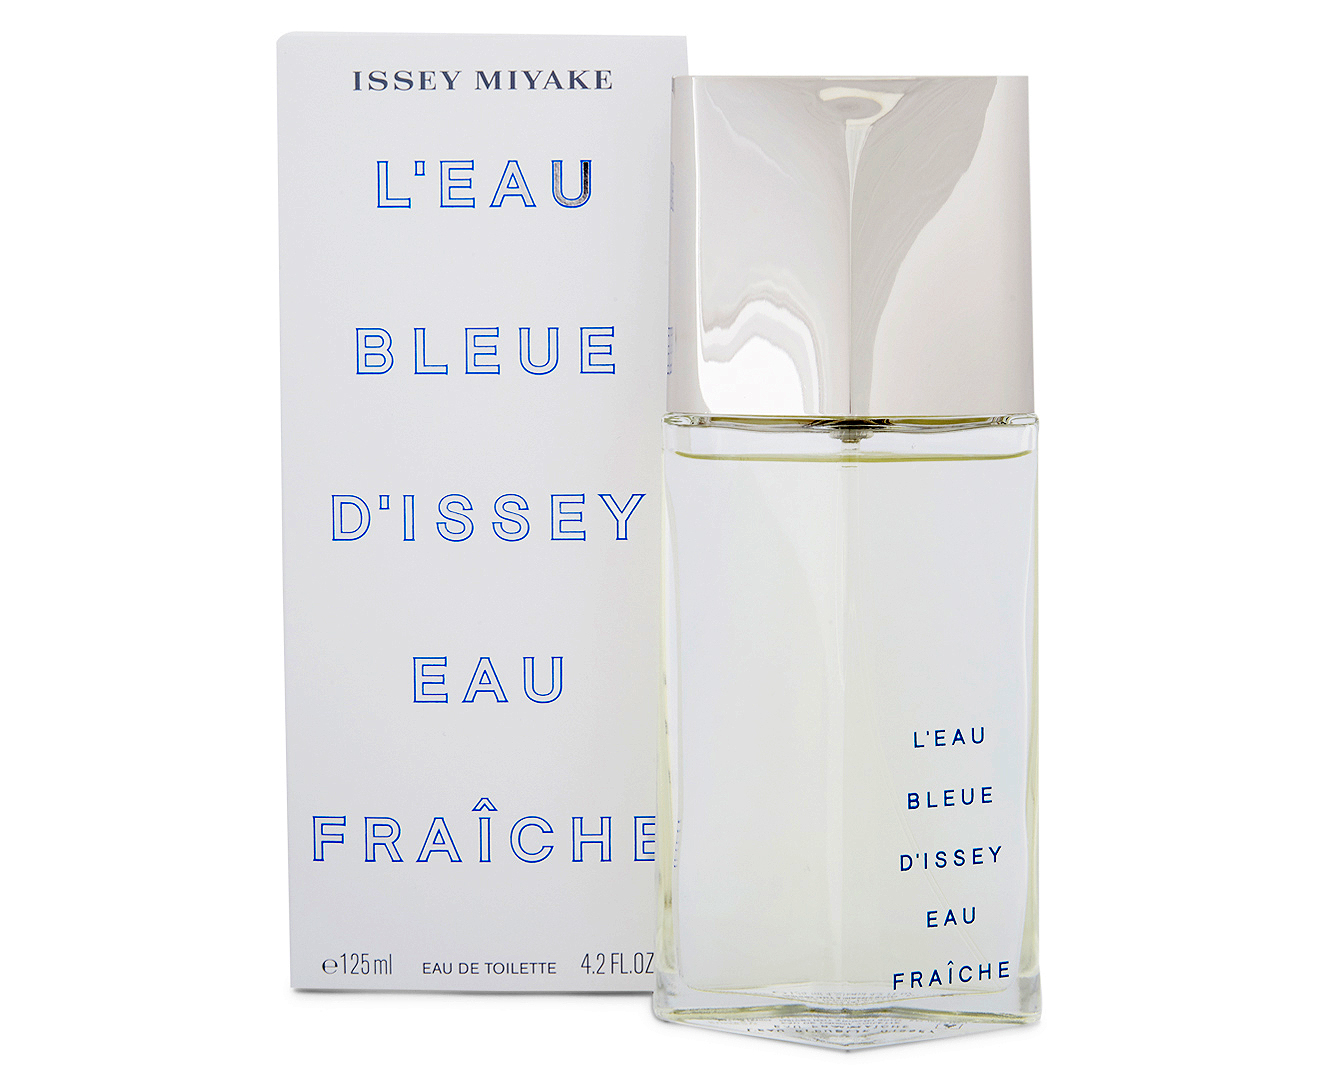 ISSEY MIYAKE L'Eau Bleue D'Issey Eau Fraiche Eau de Toilette Spray 2.5oz  75ml BX